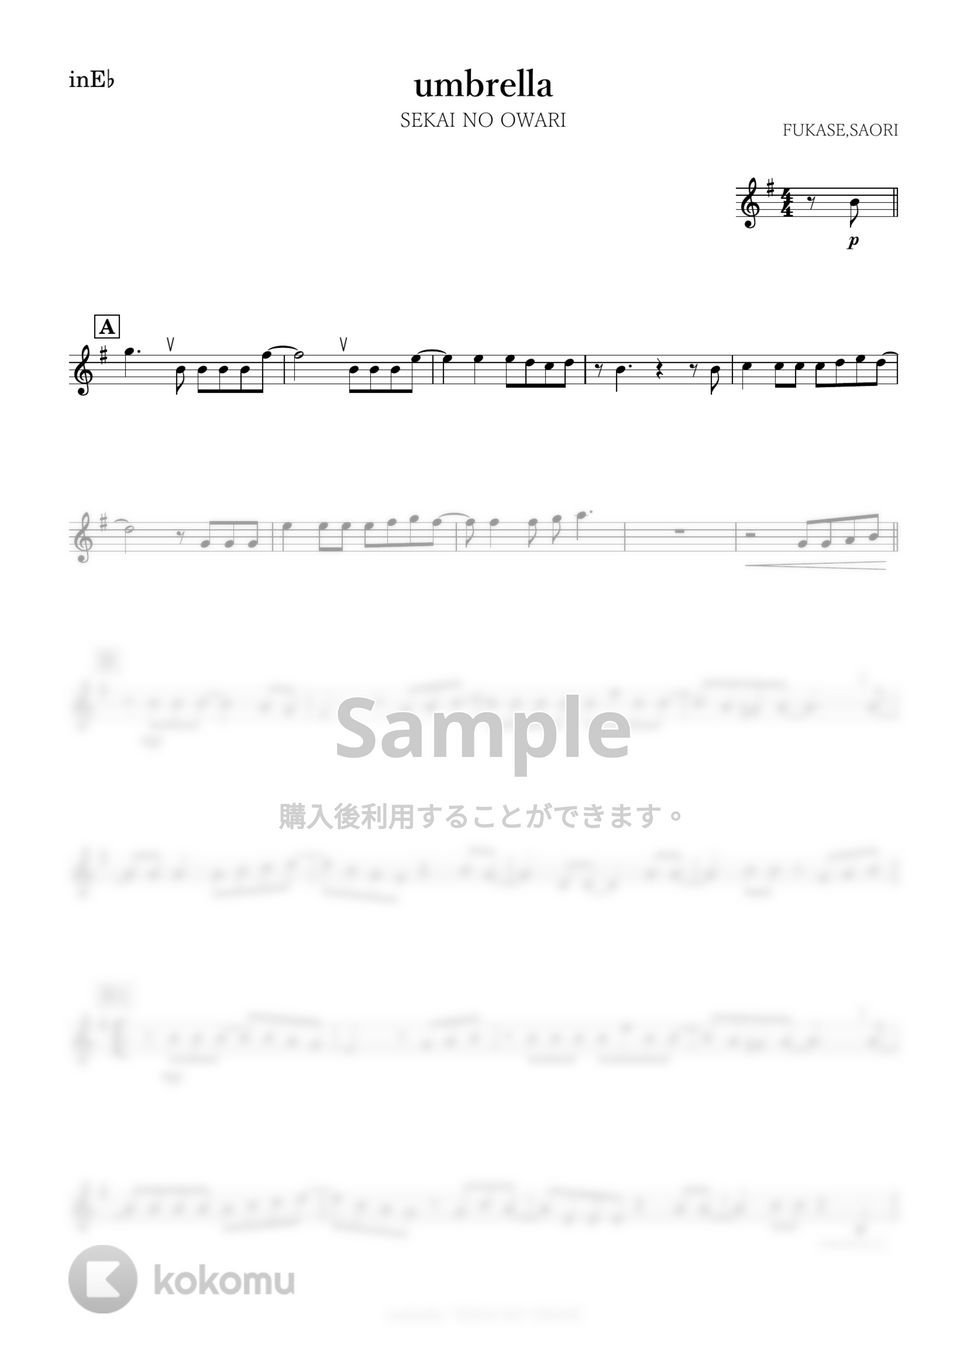 SEKAI NO OWARI - umbrella (E♭) by kanamusic